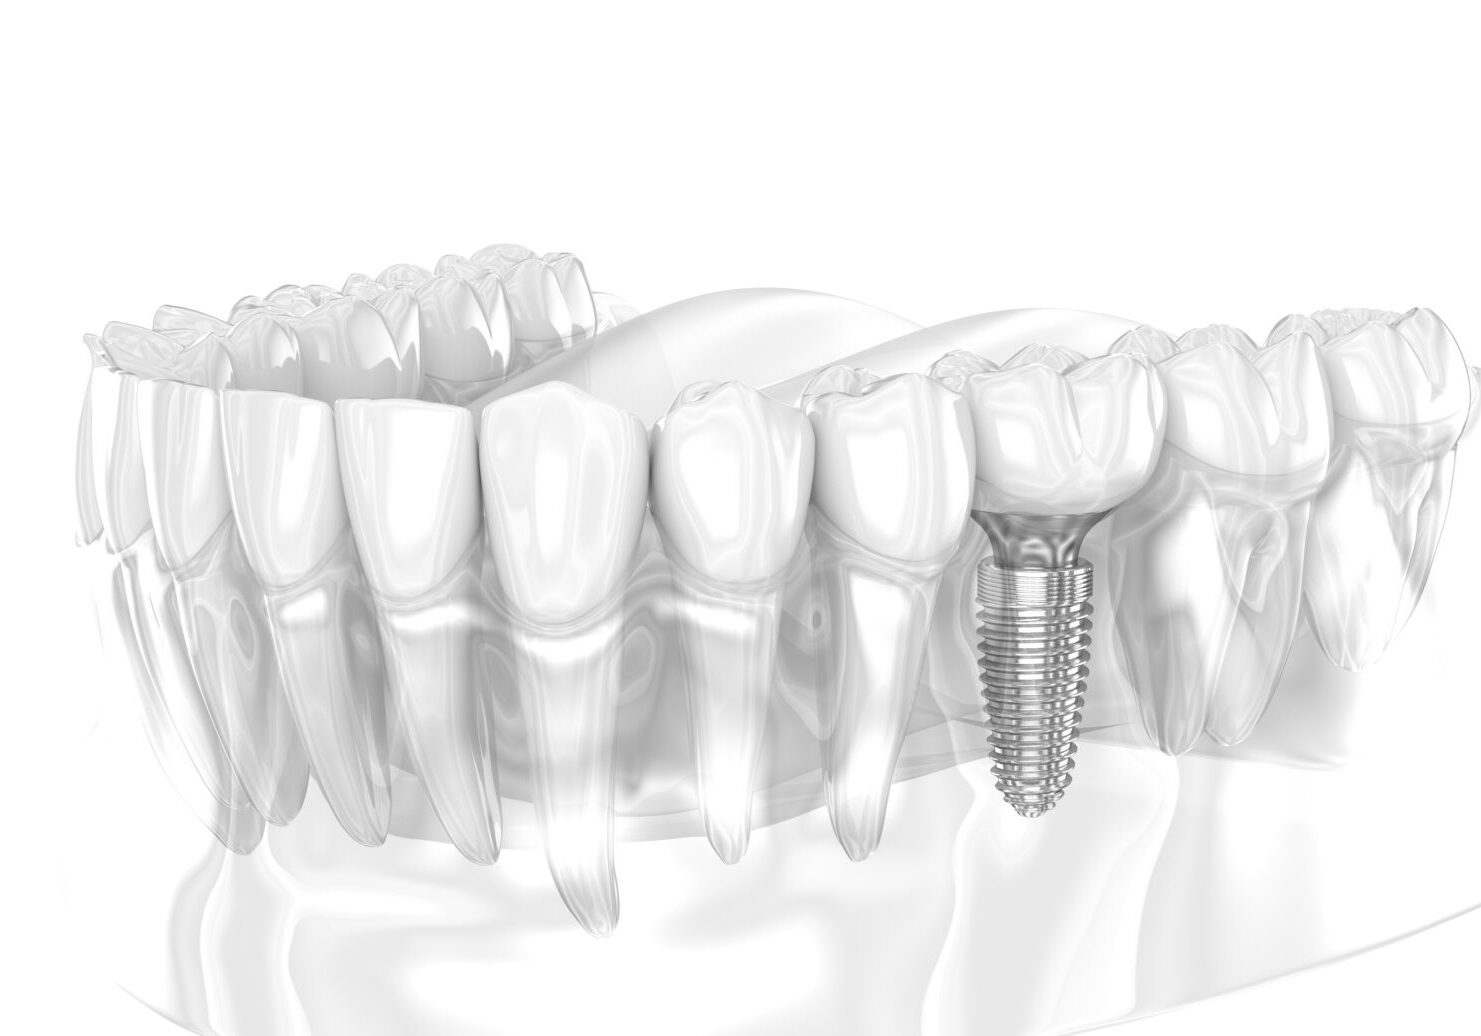 Dental Implant and ceramic crown. 3D illustration of human teeth